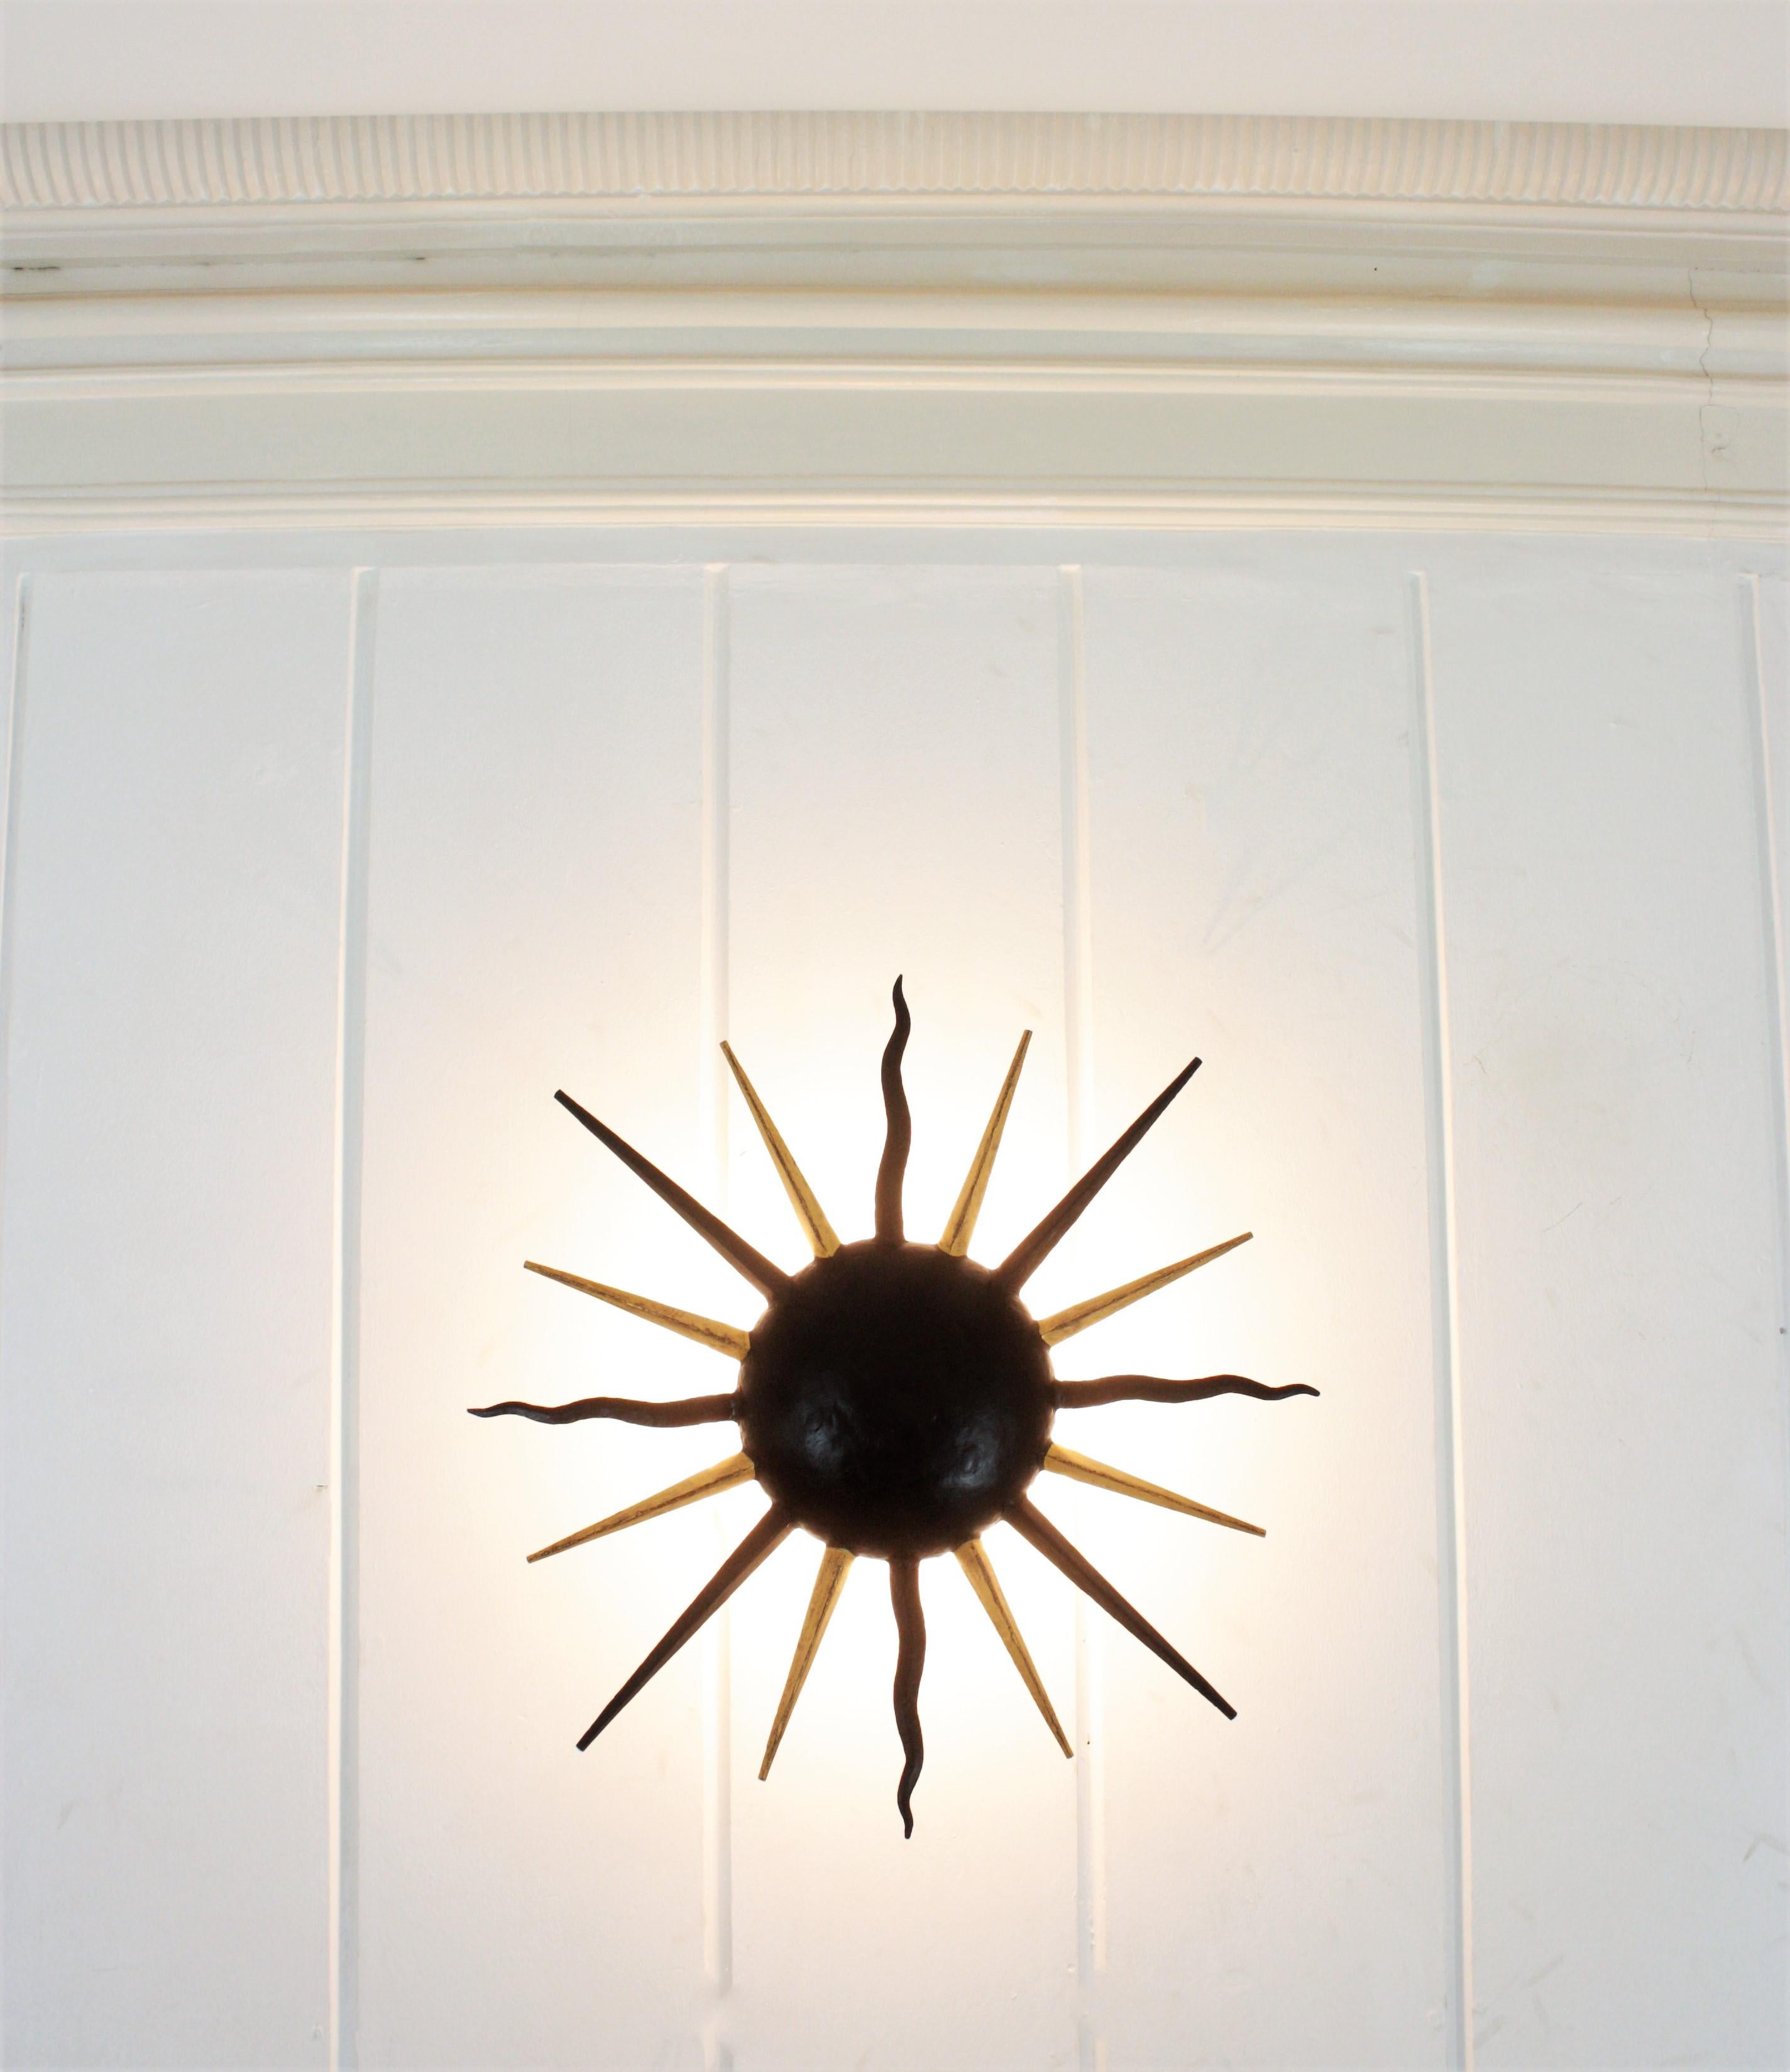 French Sunburst Light Fixture in Black and Gilt Iron, Gilbert Poillerat Style For Sale 2